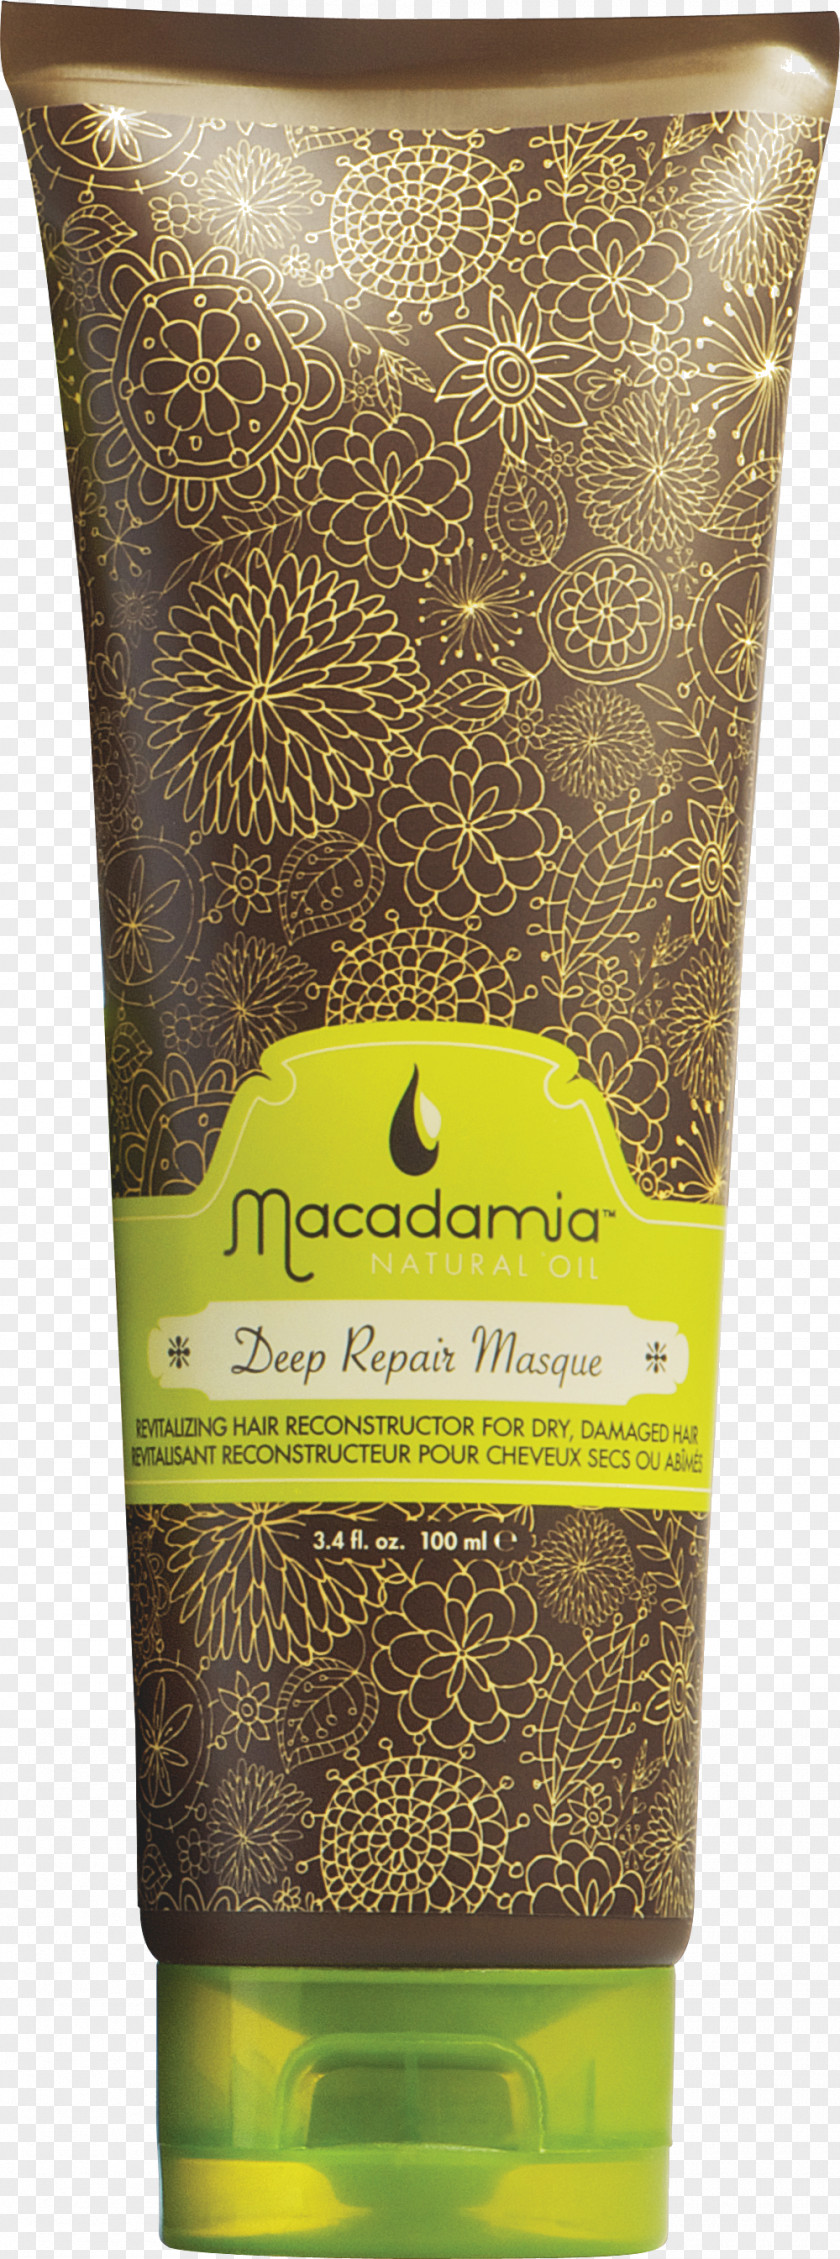 Oil Macadamia Deep Repair Masque Hair Care PNG